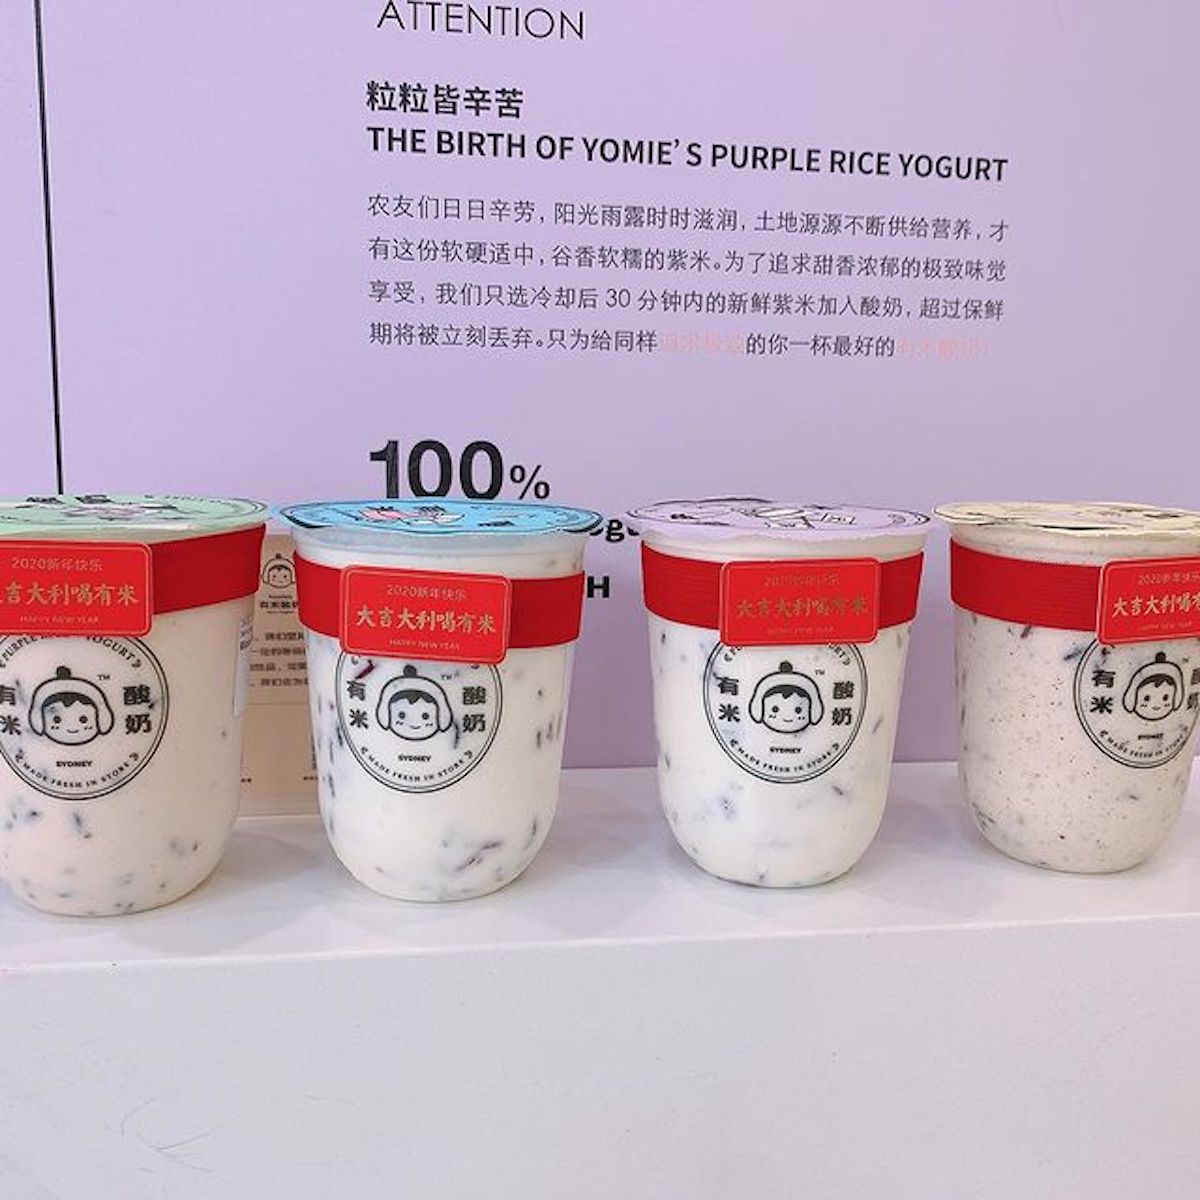 Yomie's is Bringing Australia's Purple Rice Yogurt Trend to San Francisco